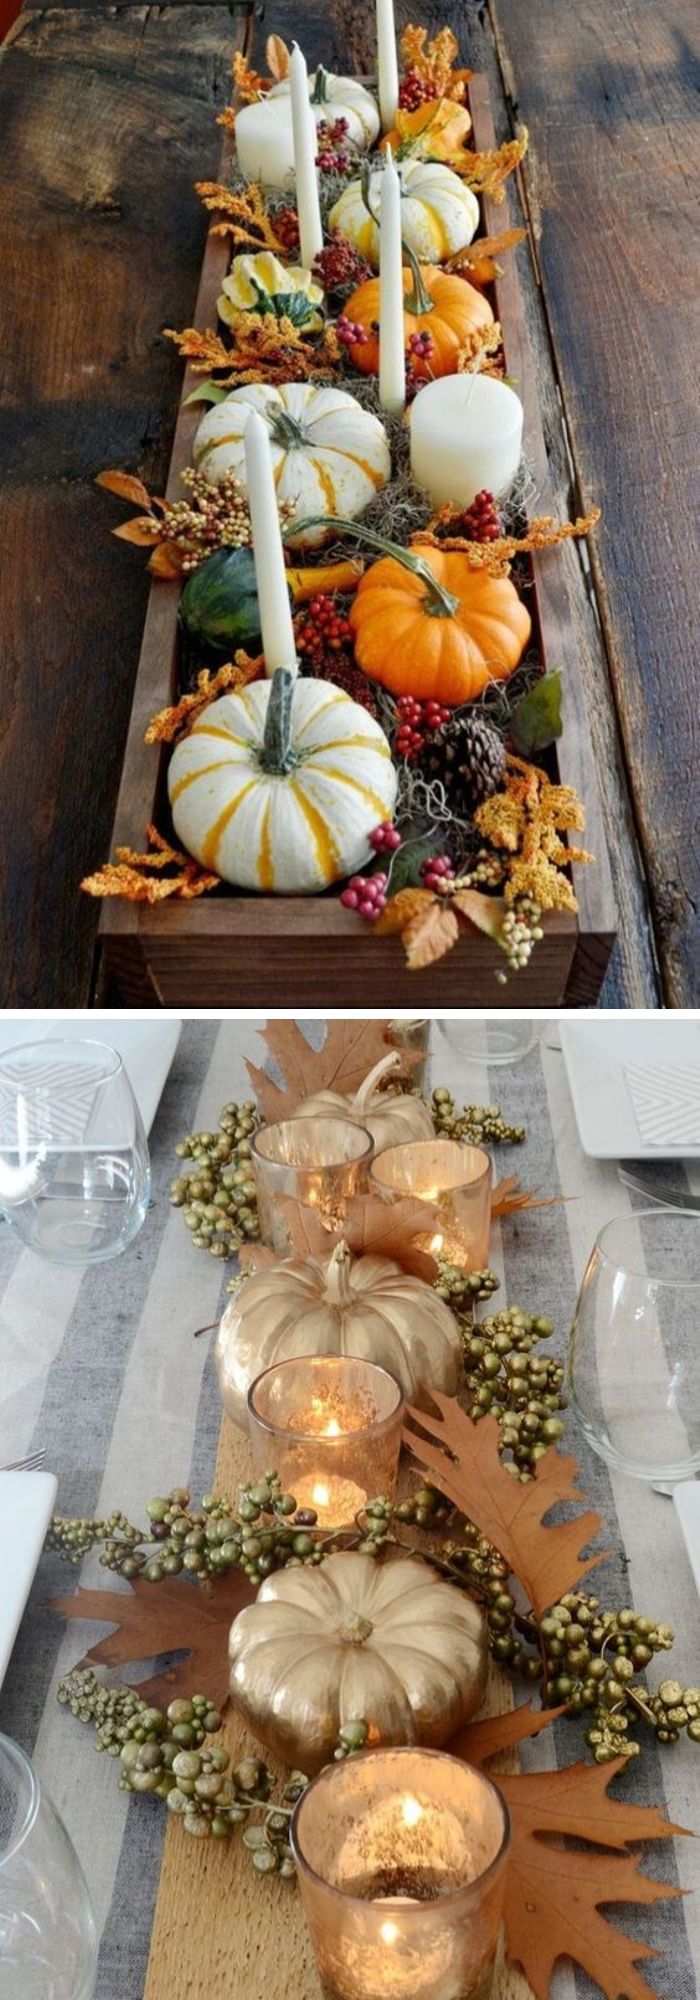 9 thanksgiving decor ideas